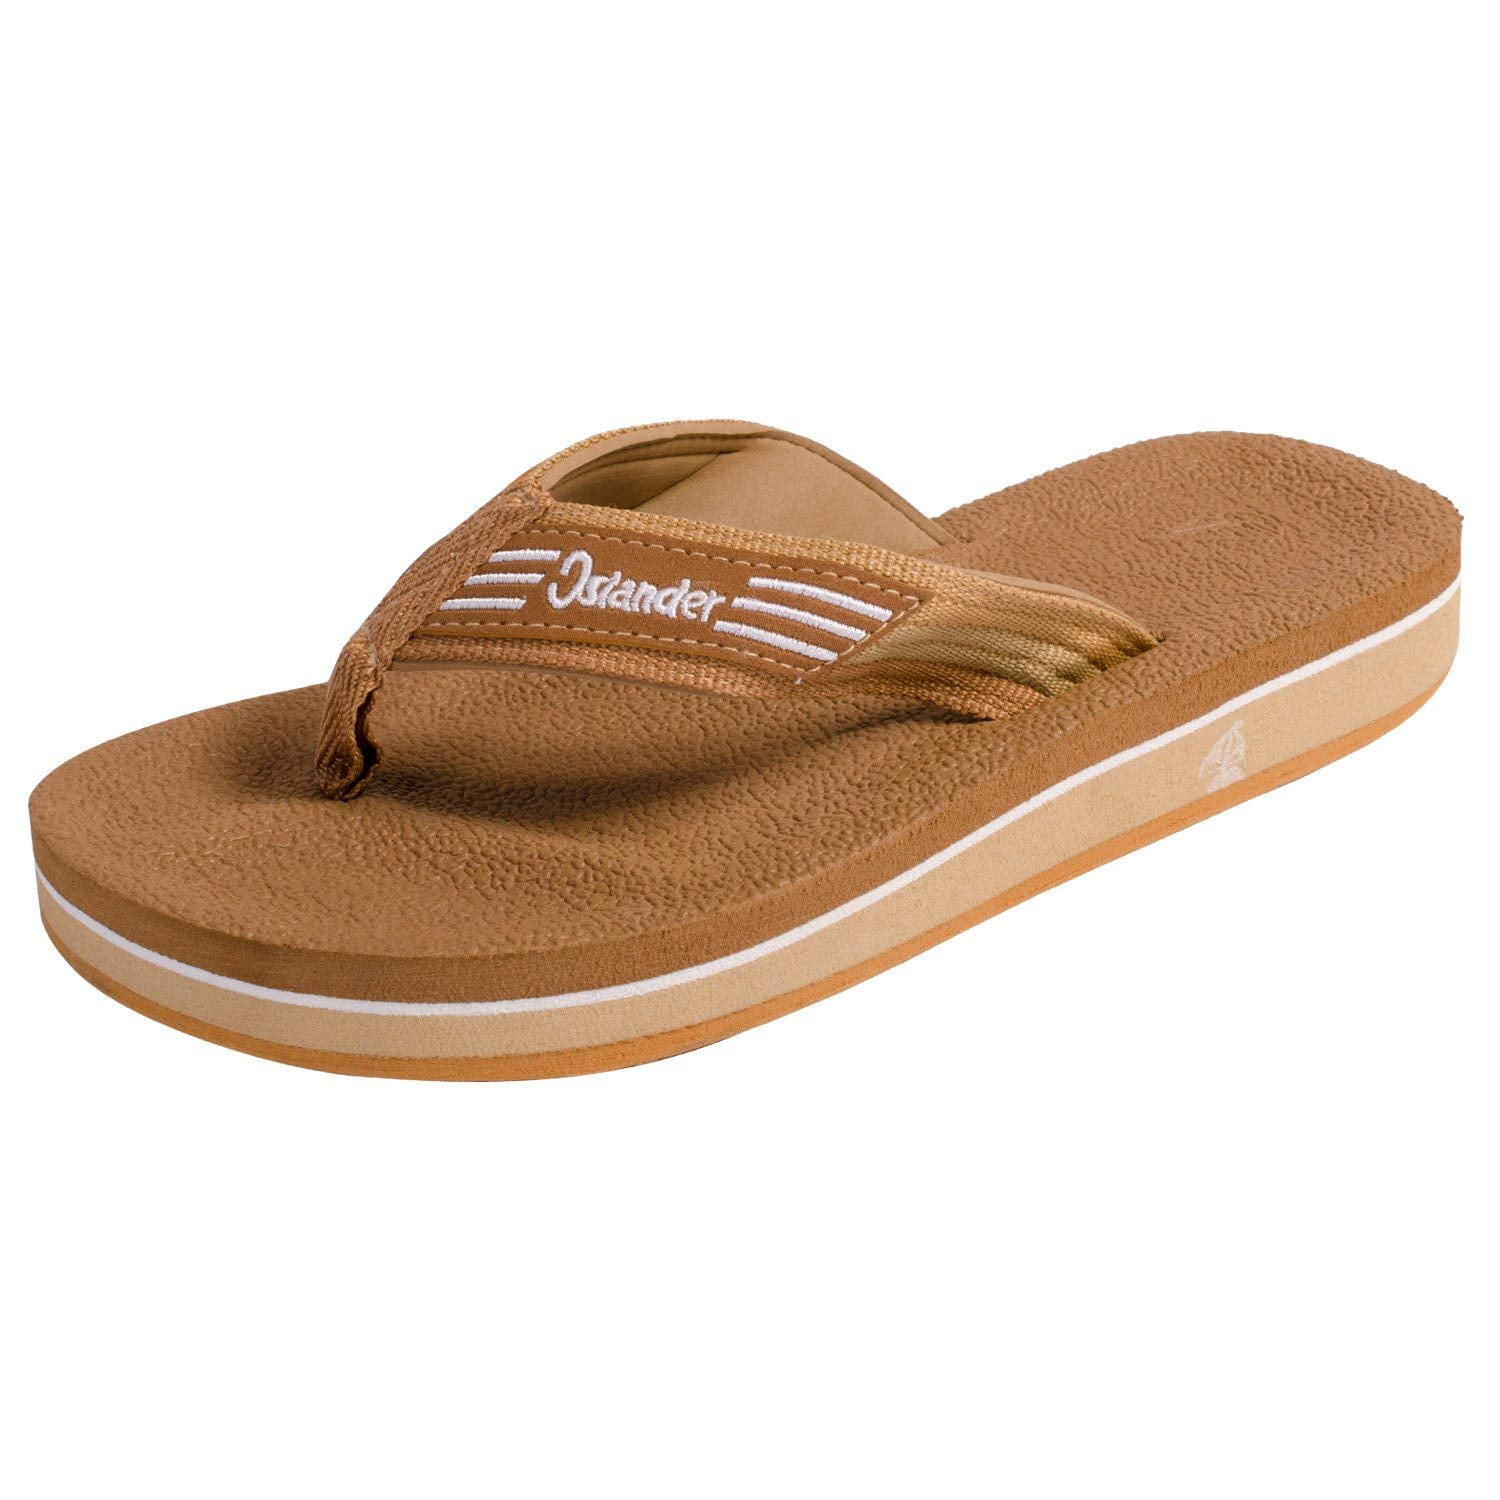 island slipper sandals